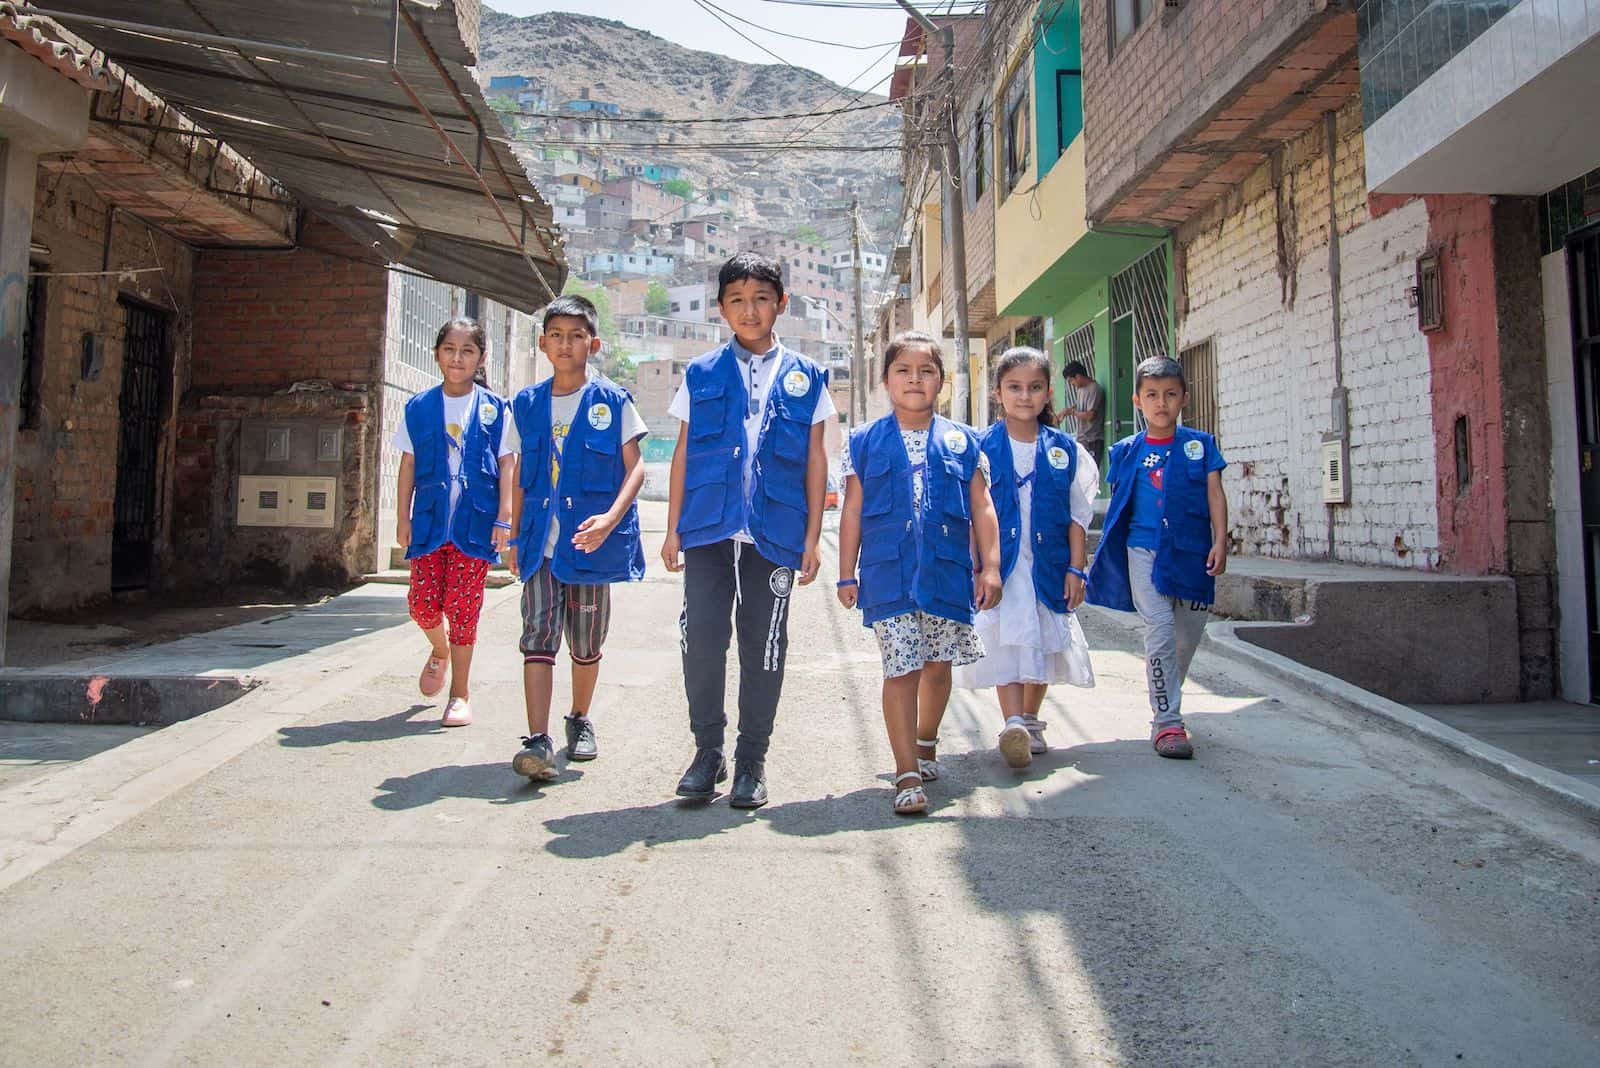 A group of children in blue vests walk down a street in Peru.